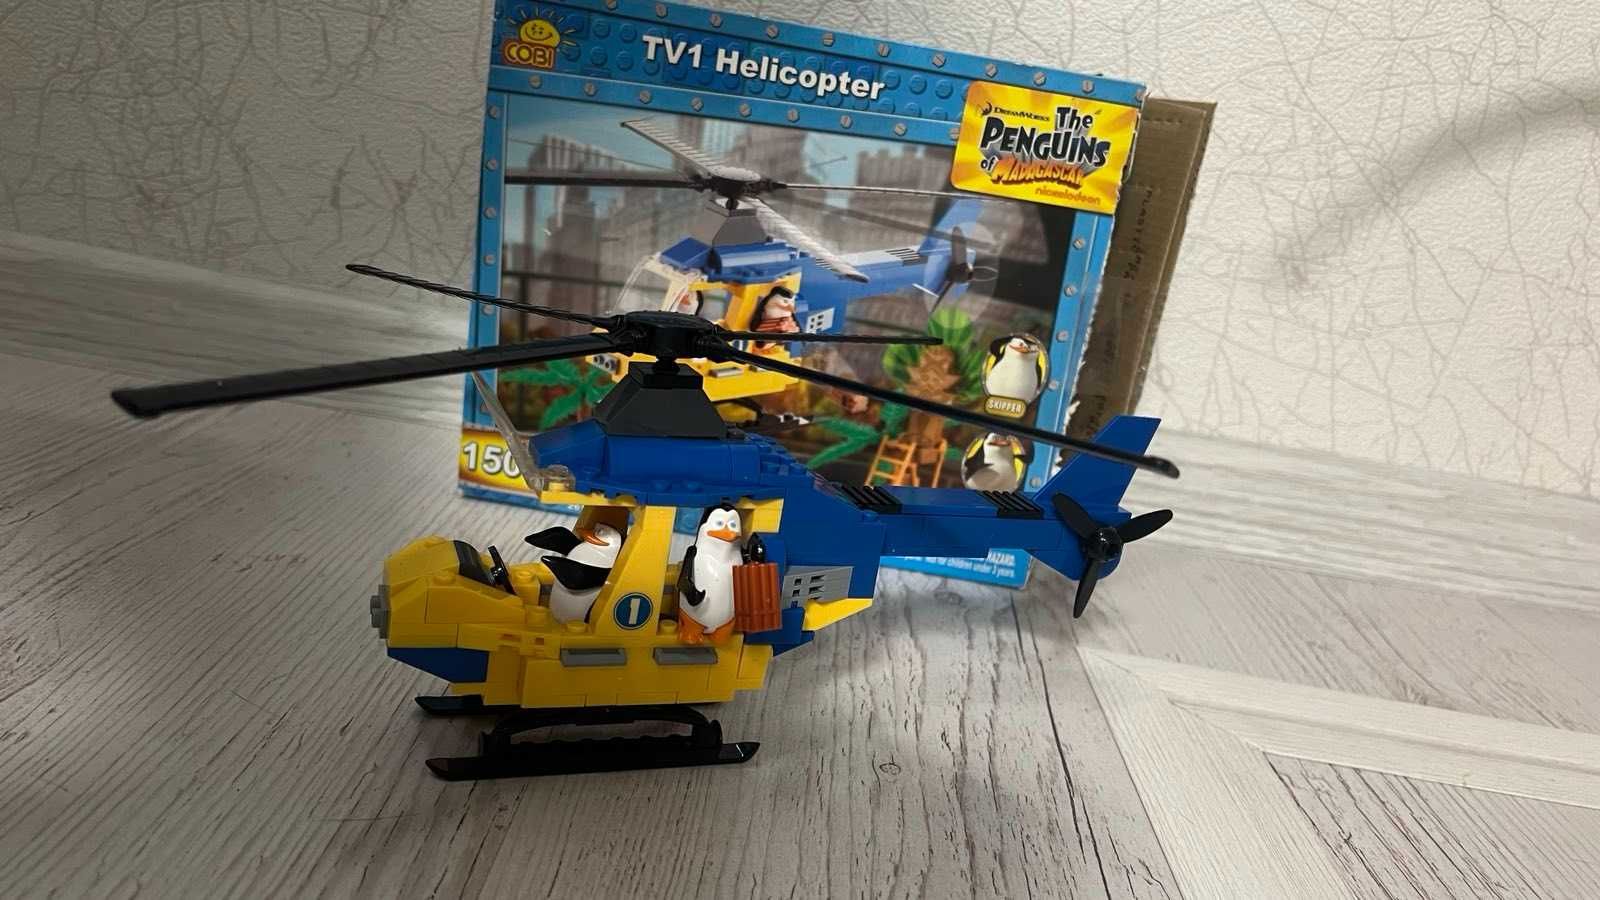 Конструктор Вертоліт TV1 Helicopter + 2 фігурки пінгвінів